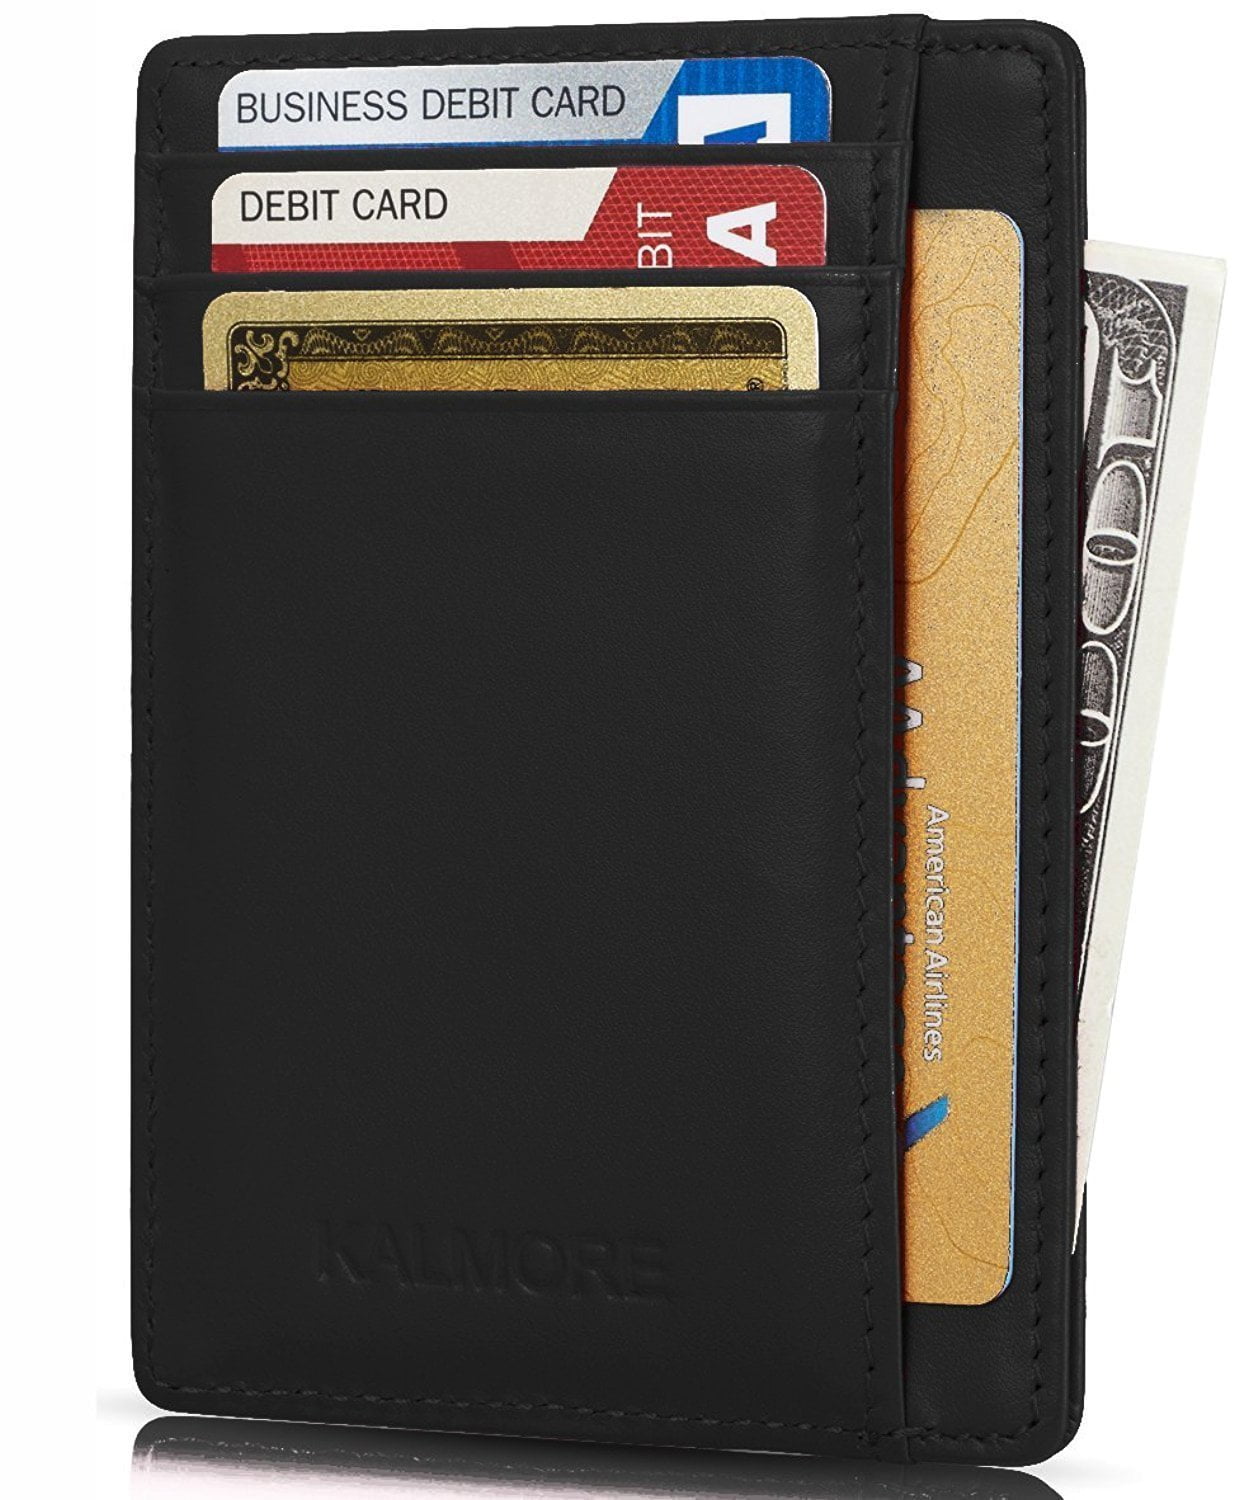 SimpleLif Credit Card Holder Mens Women Slim Wallet RFID Blocking,Badge Holder ID Window Card Holder Office Bus Cards Case with Key Ring 